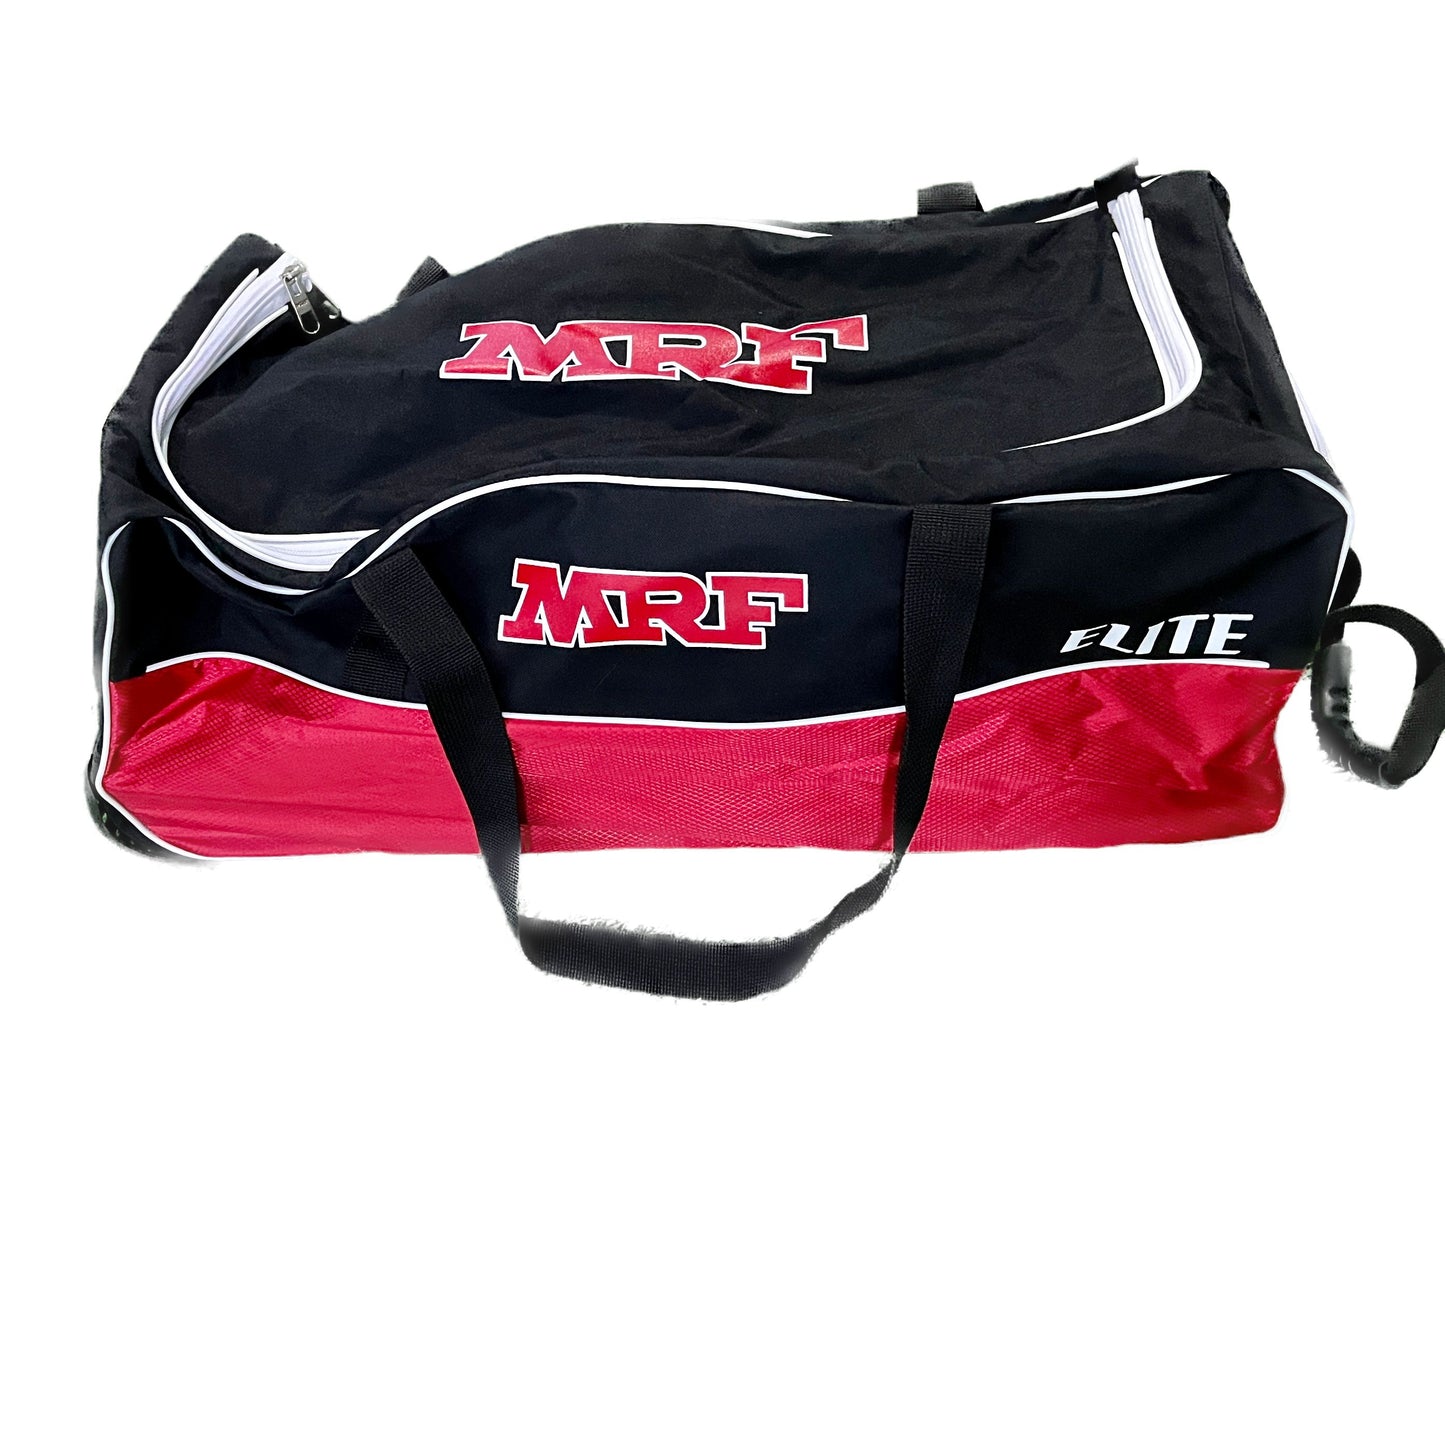 MRF Elite Junior Cricket Kit Bag with wheels